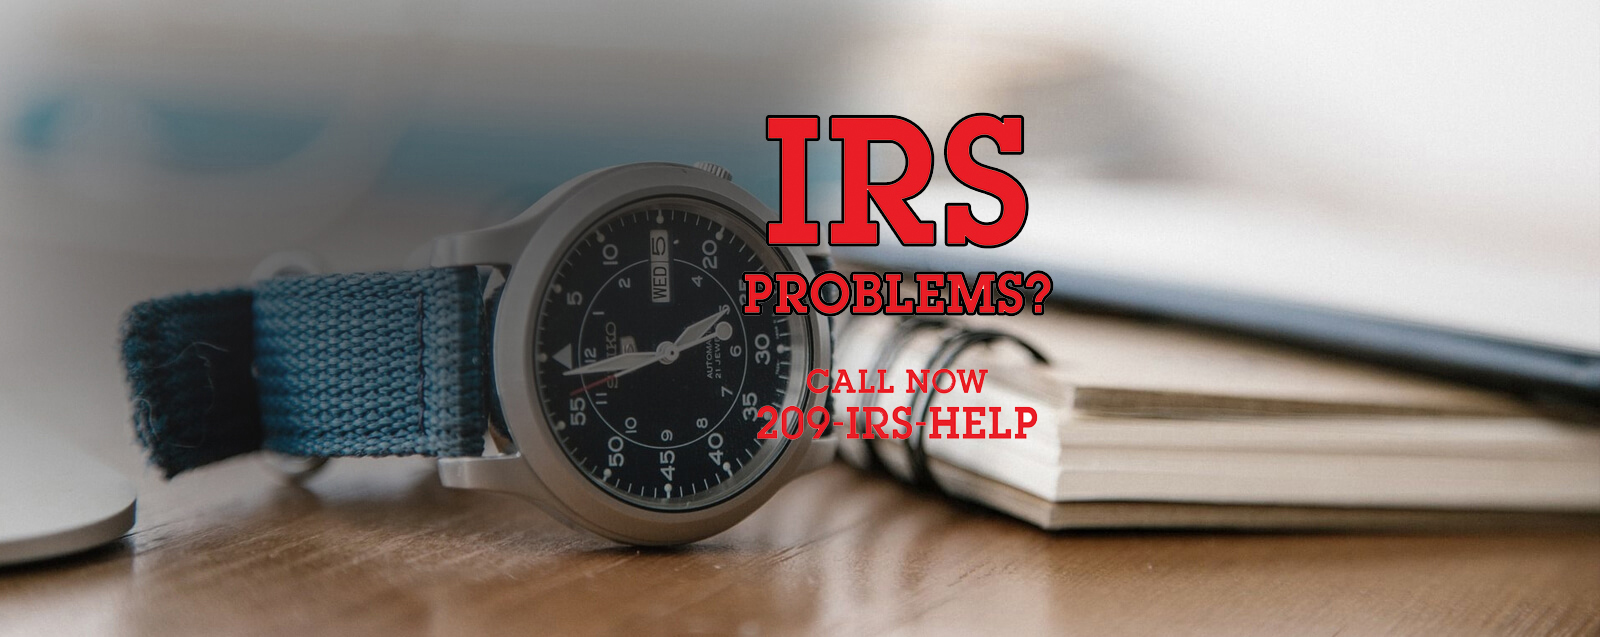 IRS Problems?